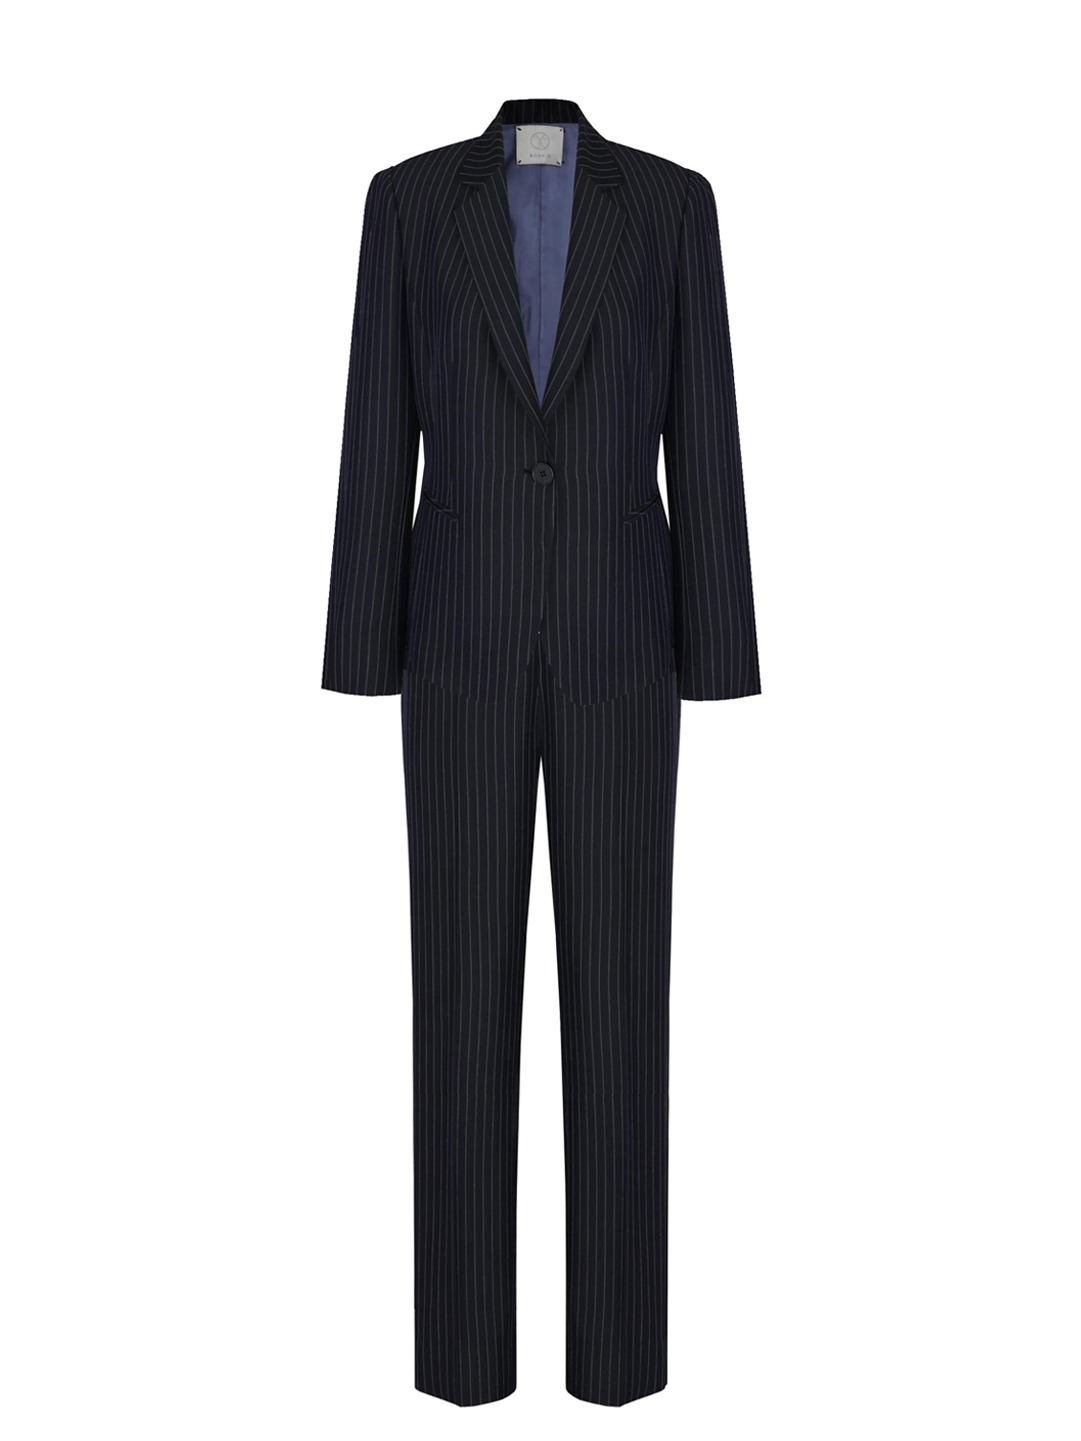 Stripe Suit (Custom)